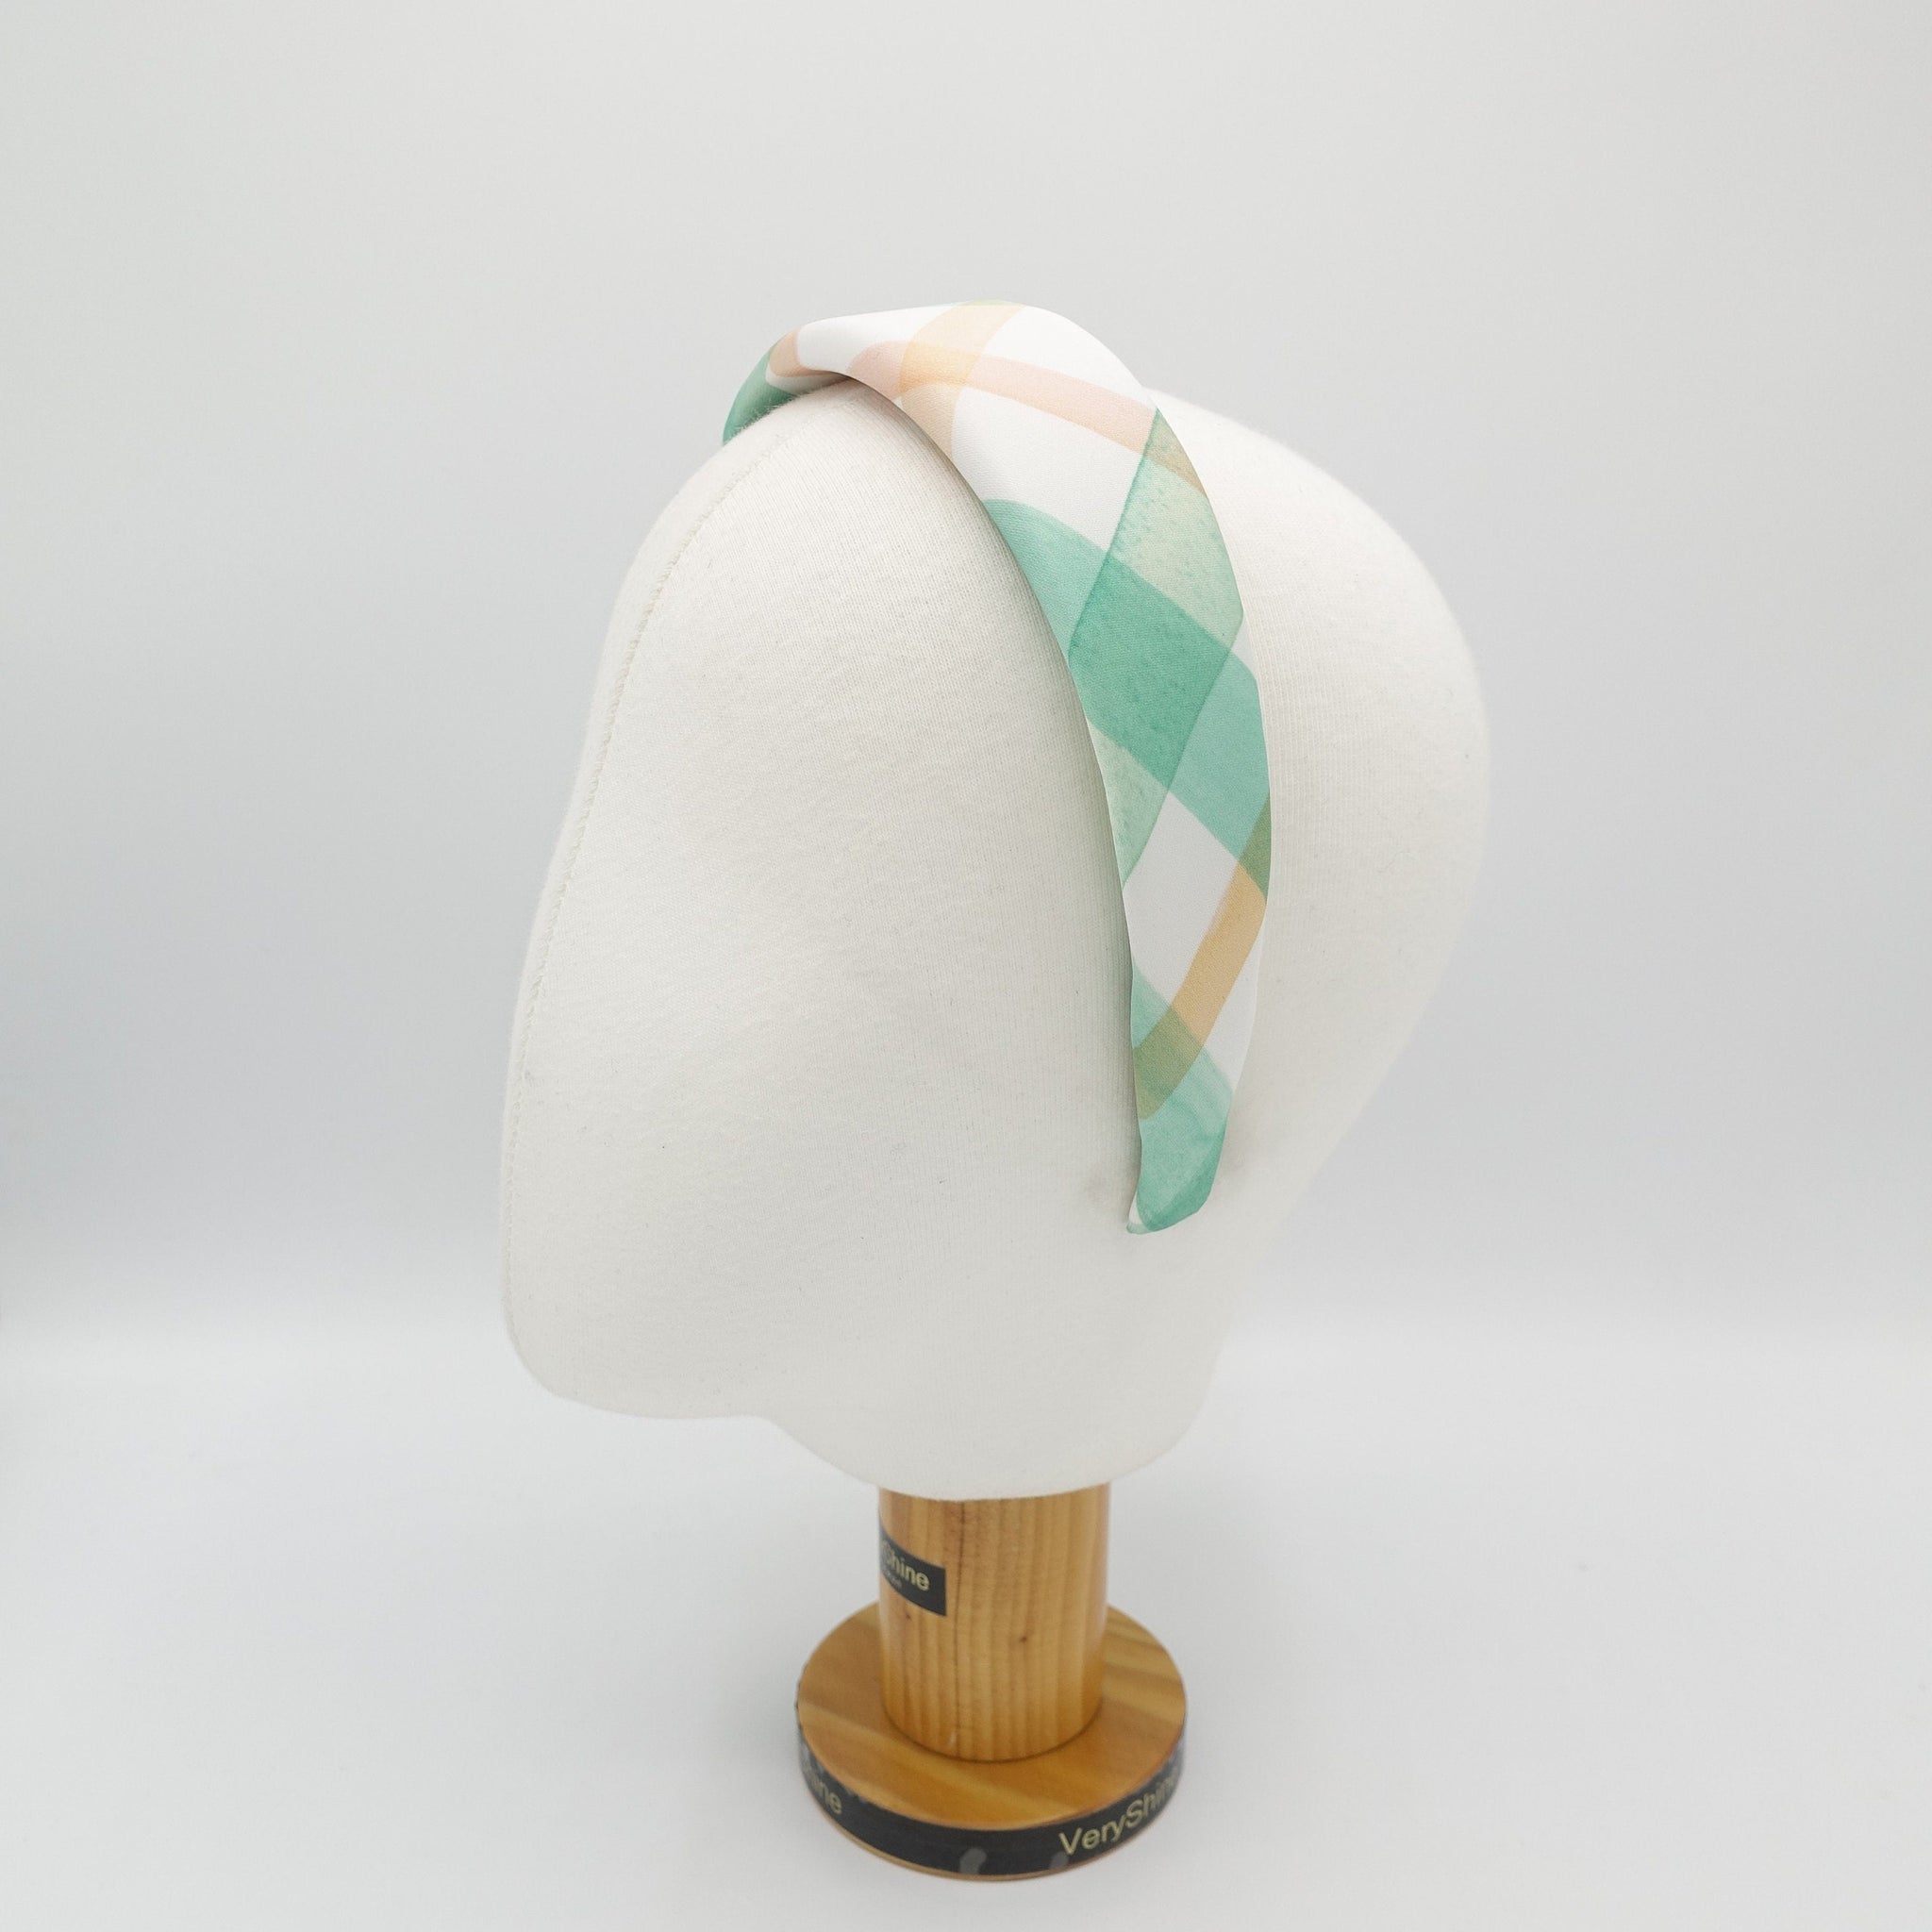 VeryShine Headband colorful check headband padded Spring Summer hairband for women